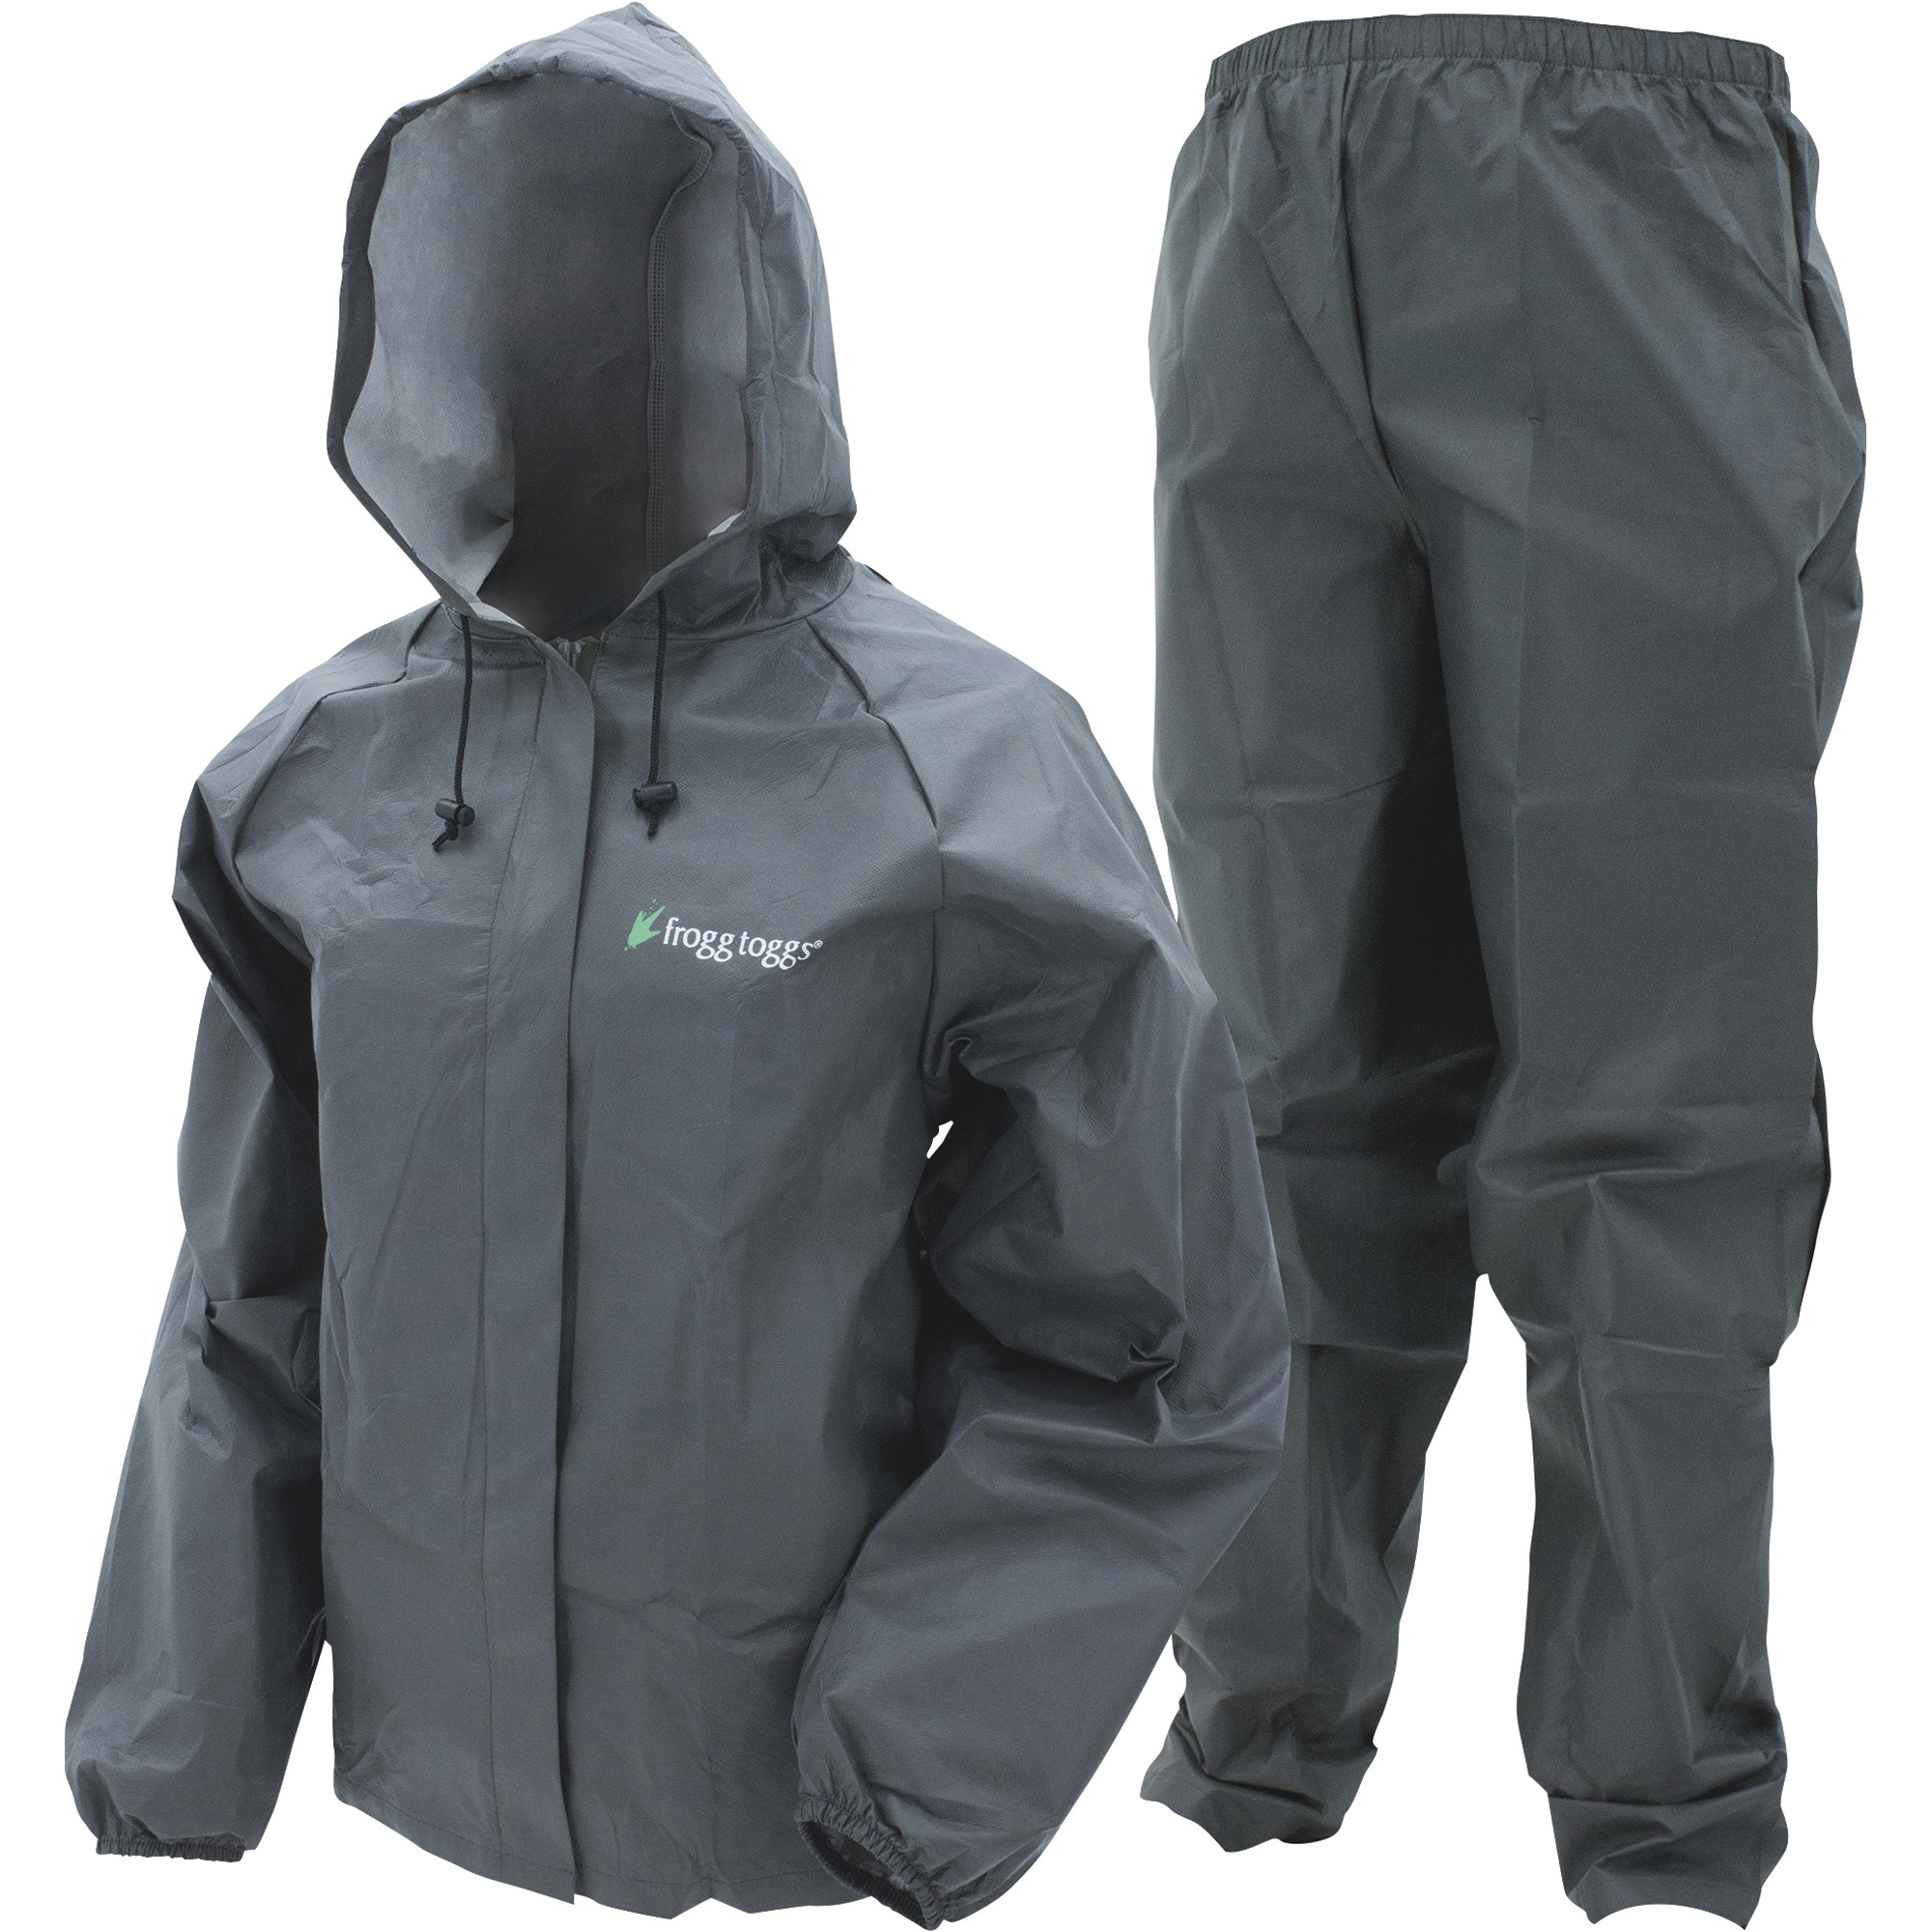 Frogg Toggs Men's Ultra-Lite 2 Jacket and Pants Rain Suit â Carbon, Large, Model UL12104-01LG